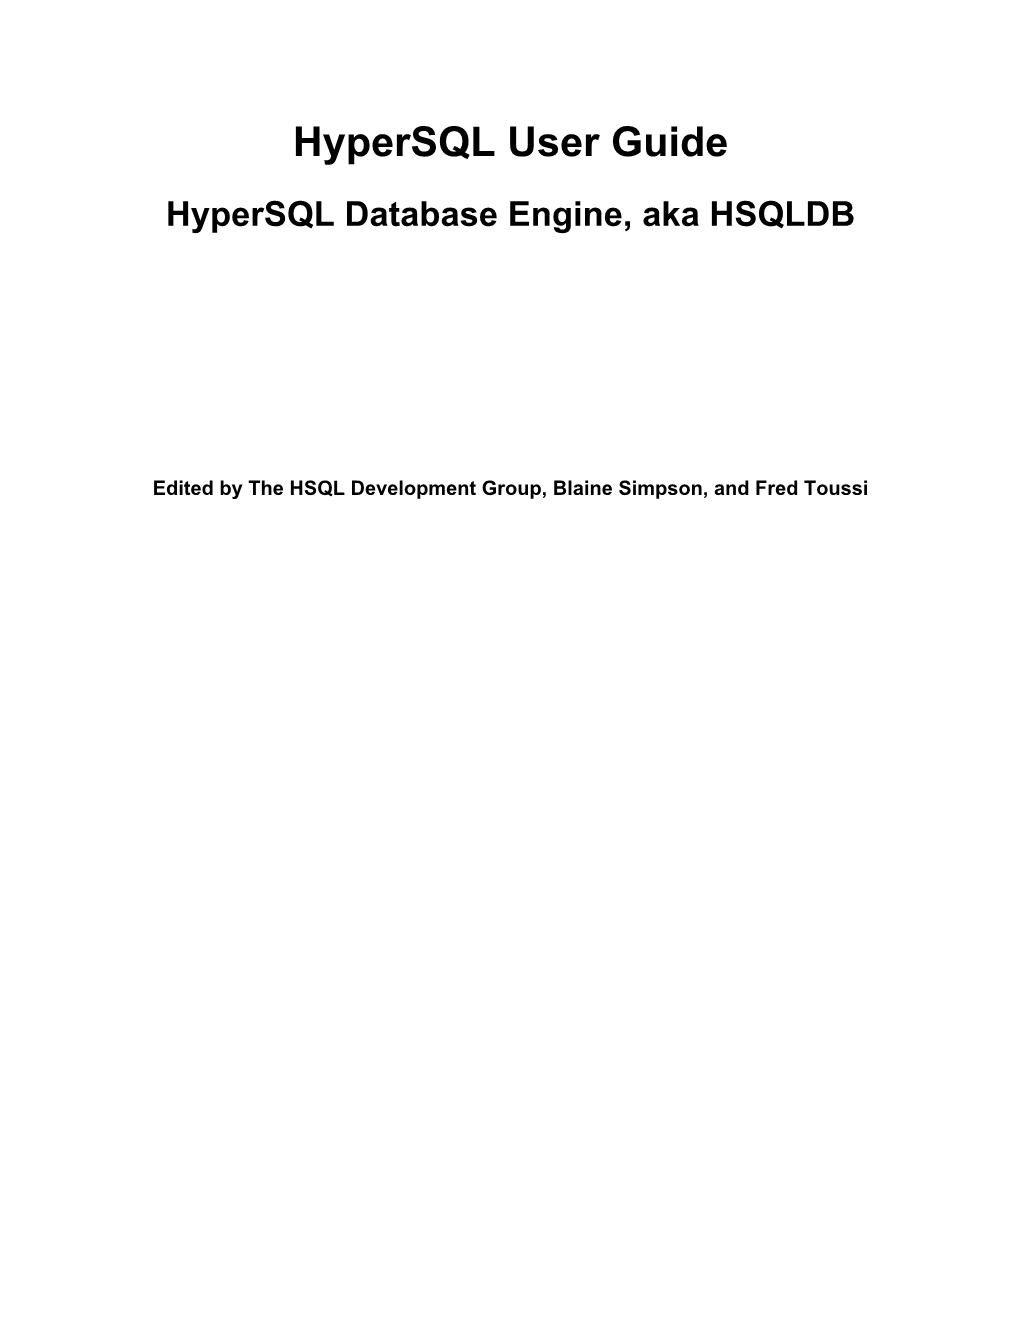 Hypersql User Guide Hypersql Database Engine, Aka HSQLDB